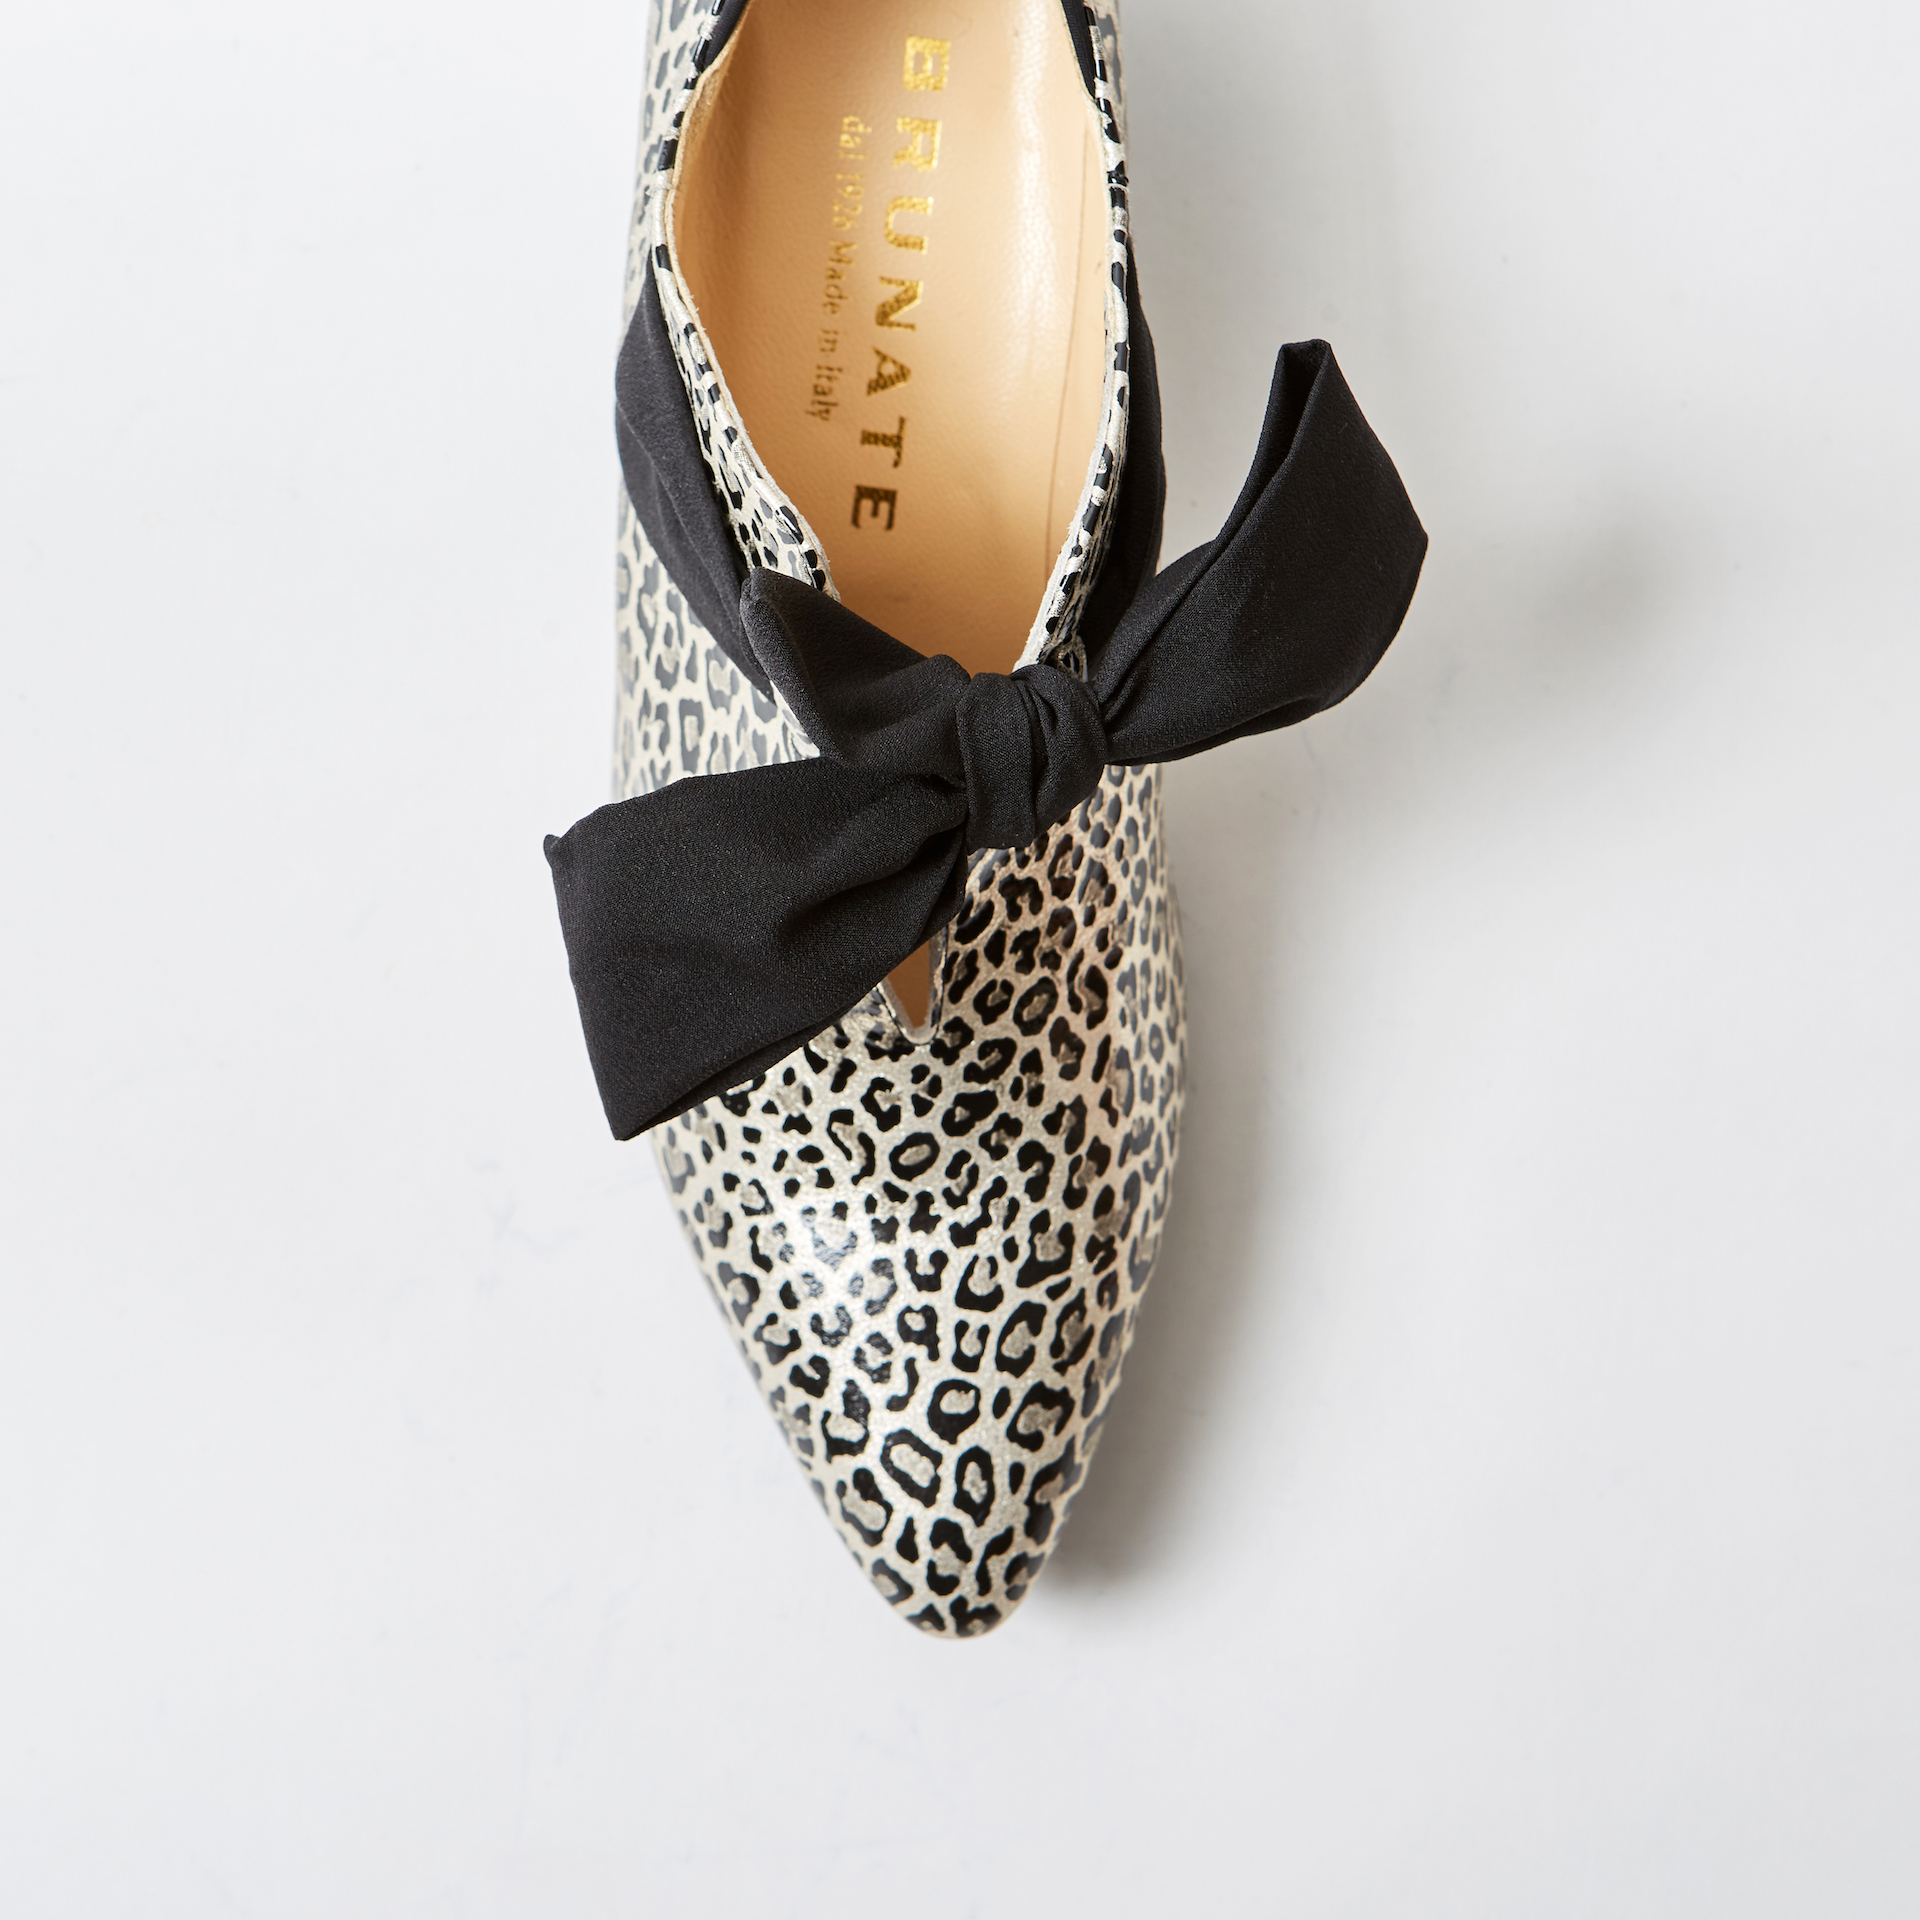 Brunate Womens Metallic Animal Print Leather Shoe with Bow